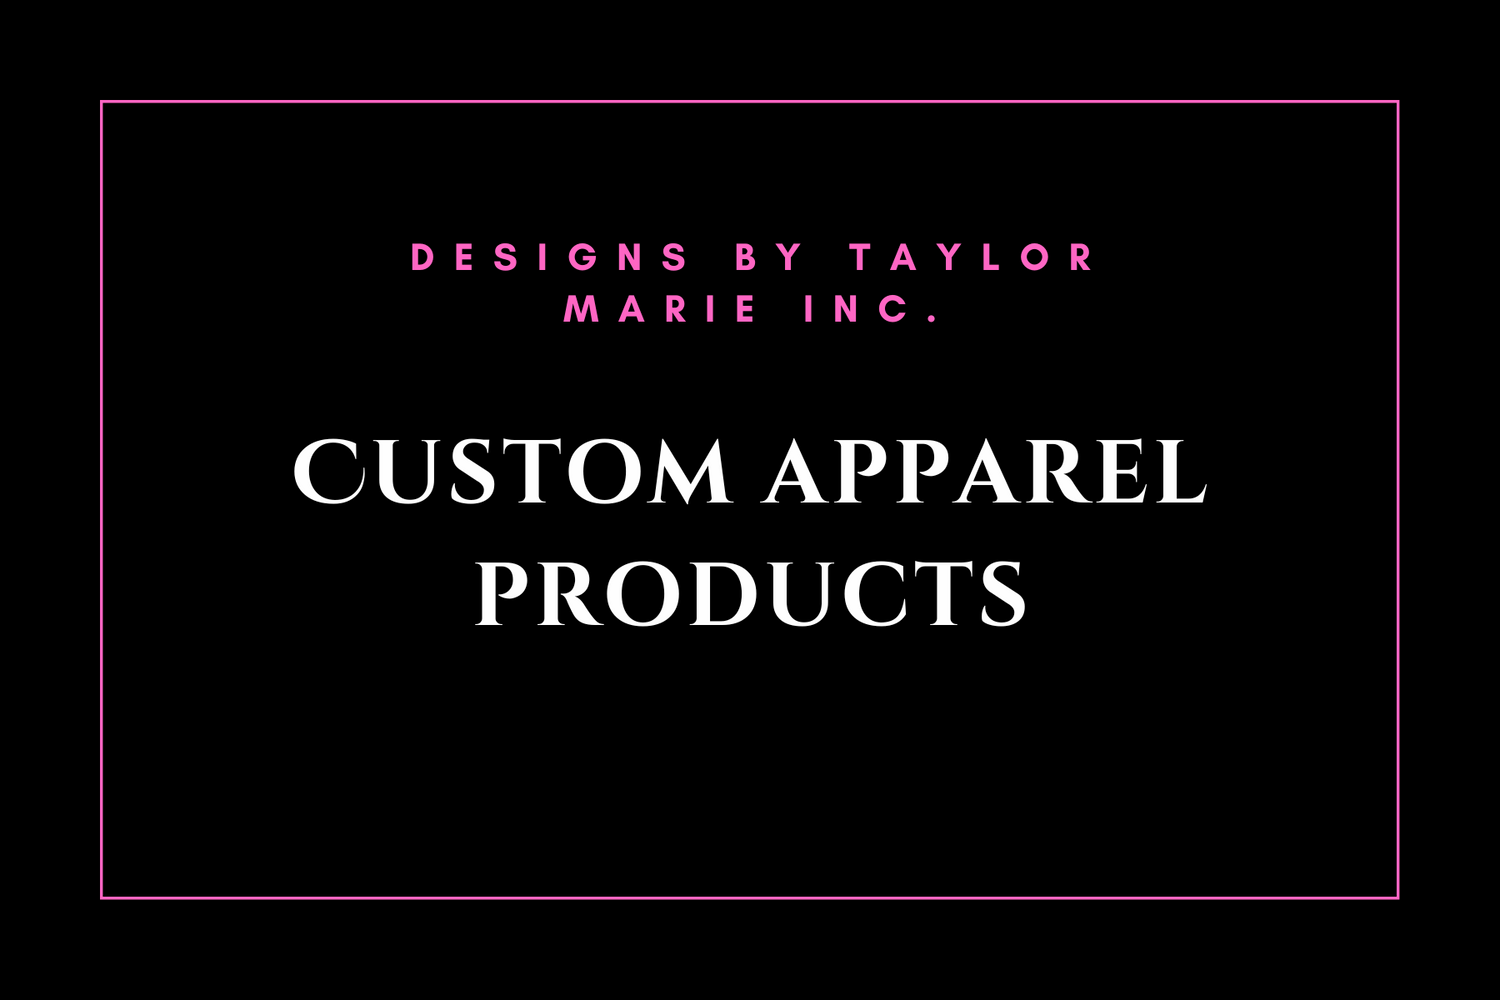 Custom Apparel Products